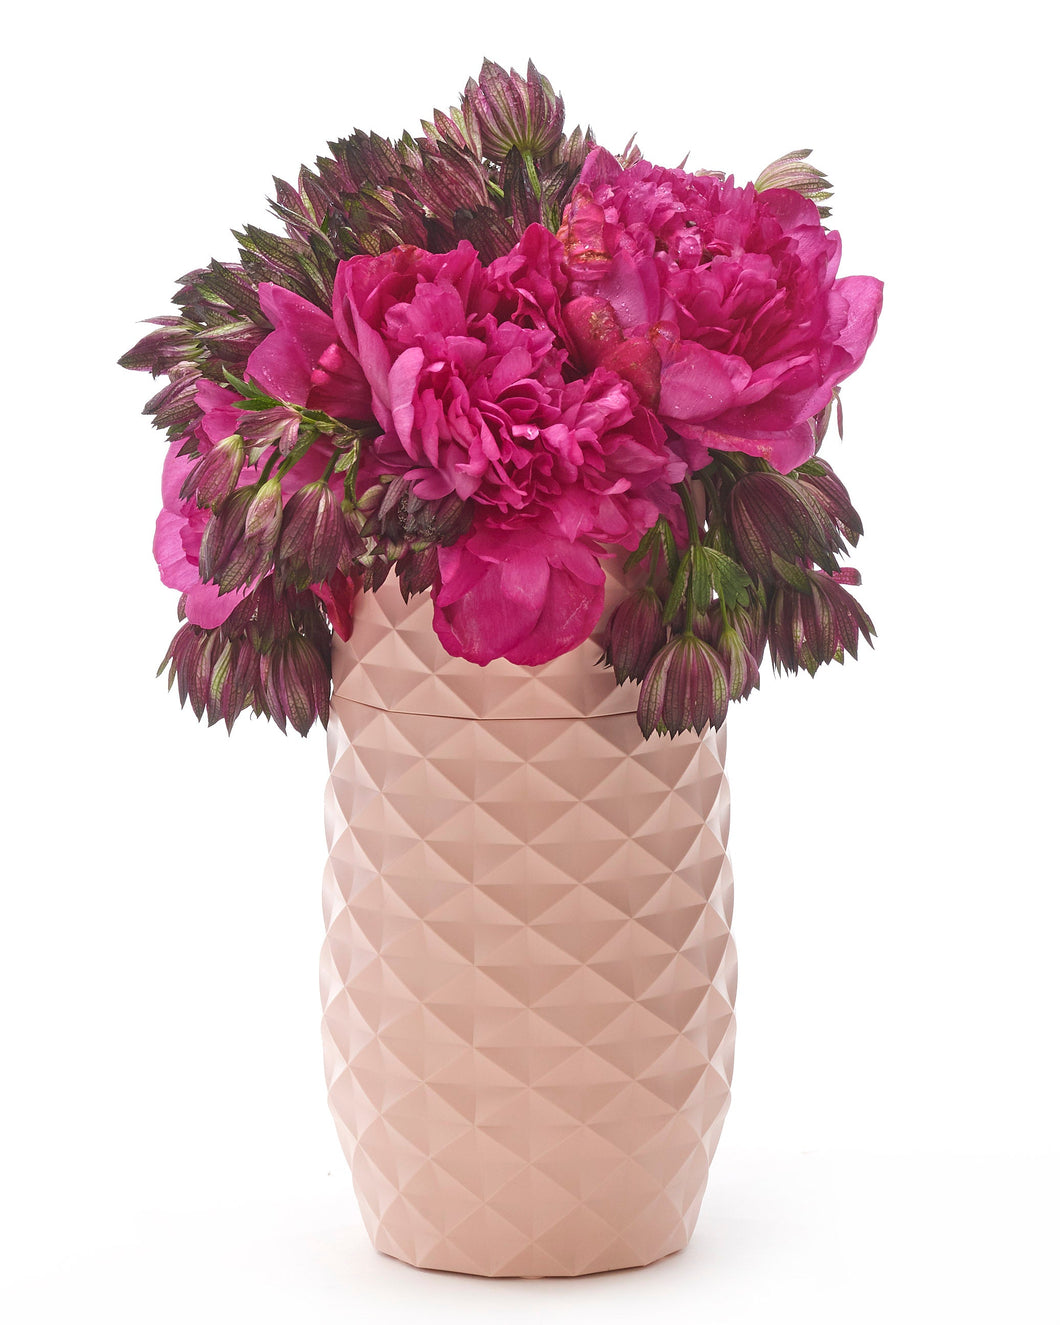 The Amaranth Vase in Pink - 7.5